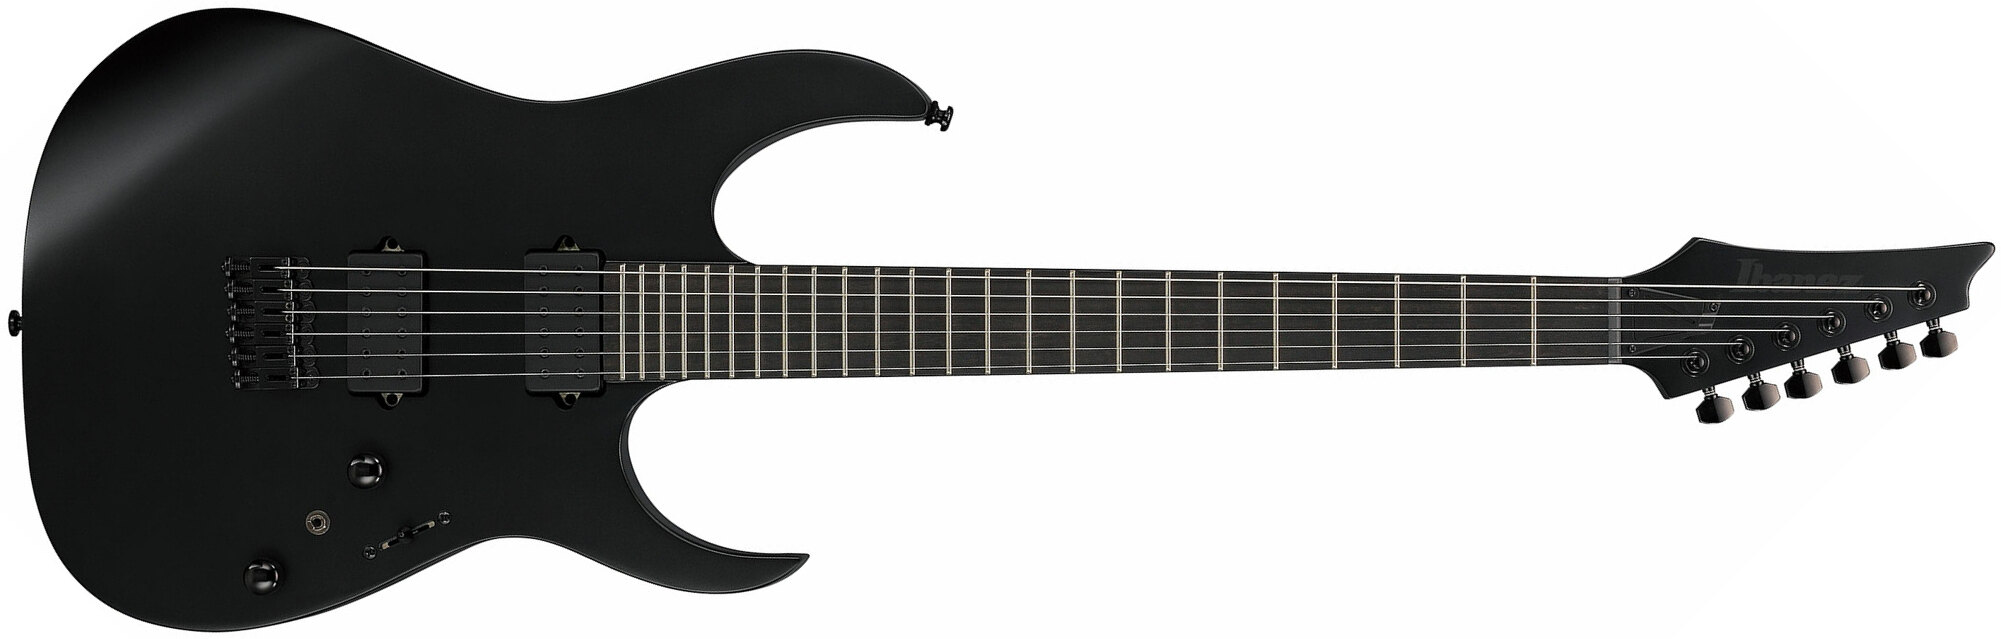 Ibanez Rgrtb621 Bkf Axion Label Hh Dimarzio Ht Eb - Black Flat - Str shape electric guitar - Main picture